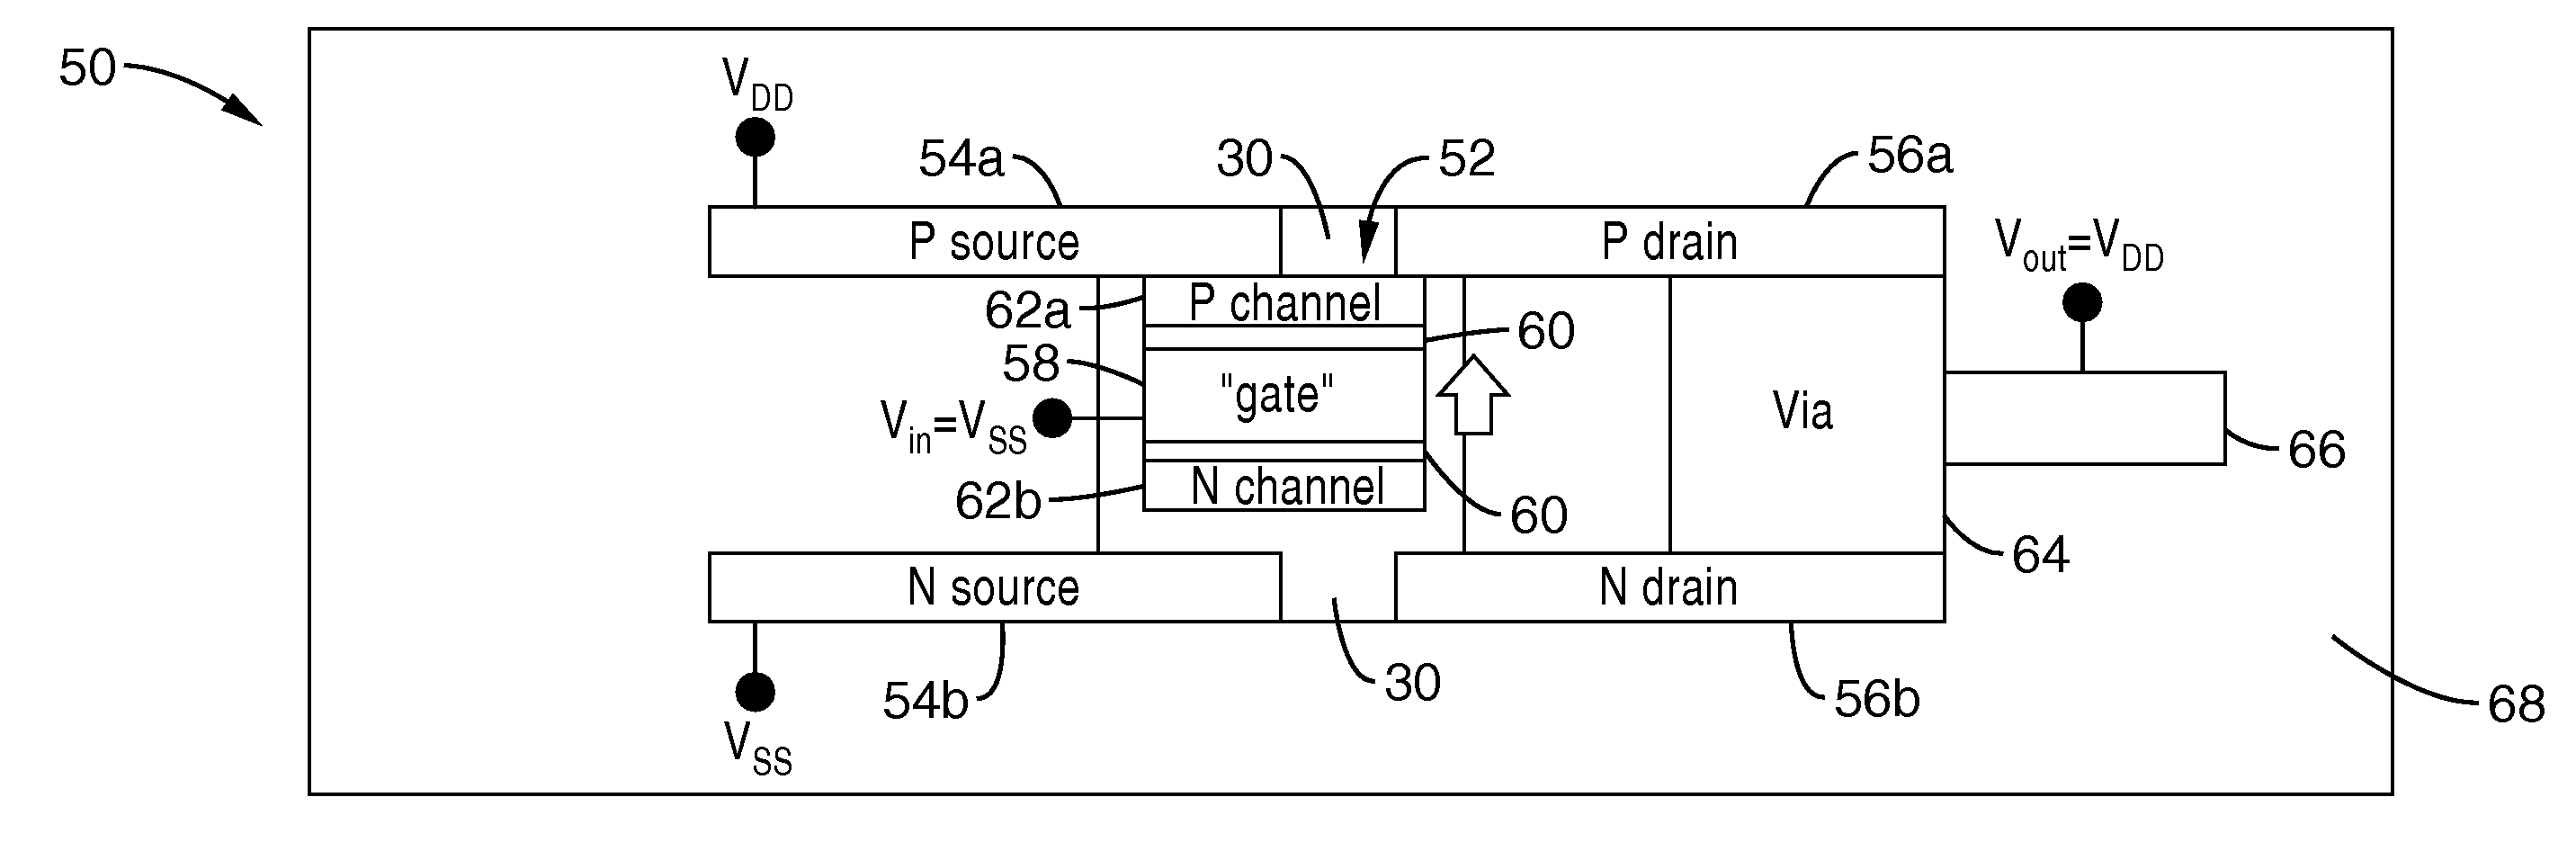 Metal-insulator-metal (MIM) switching devices